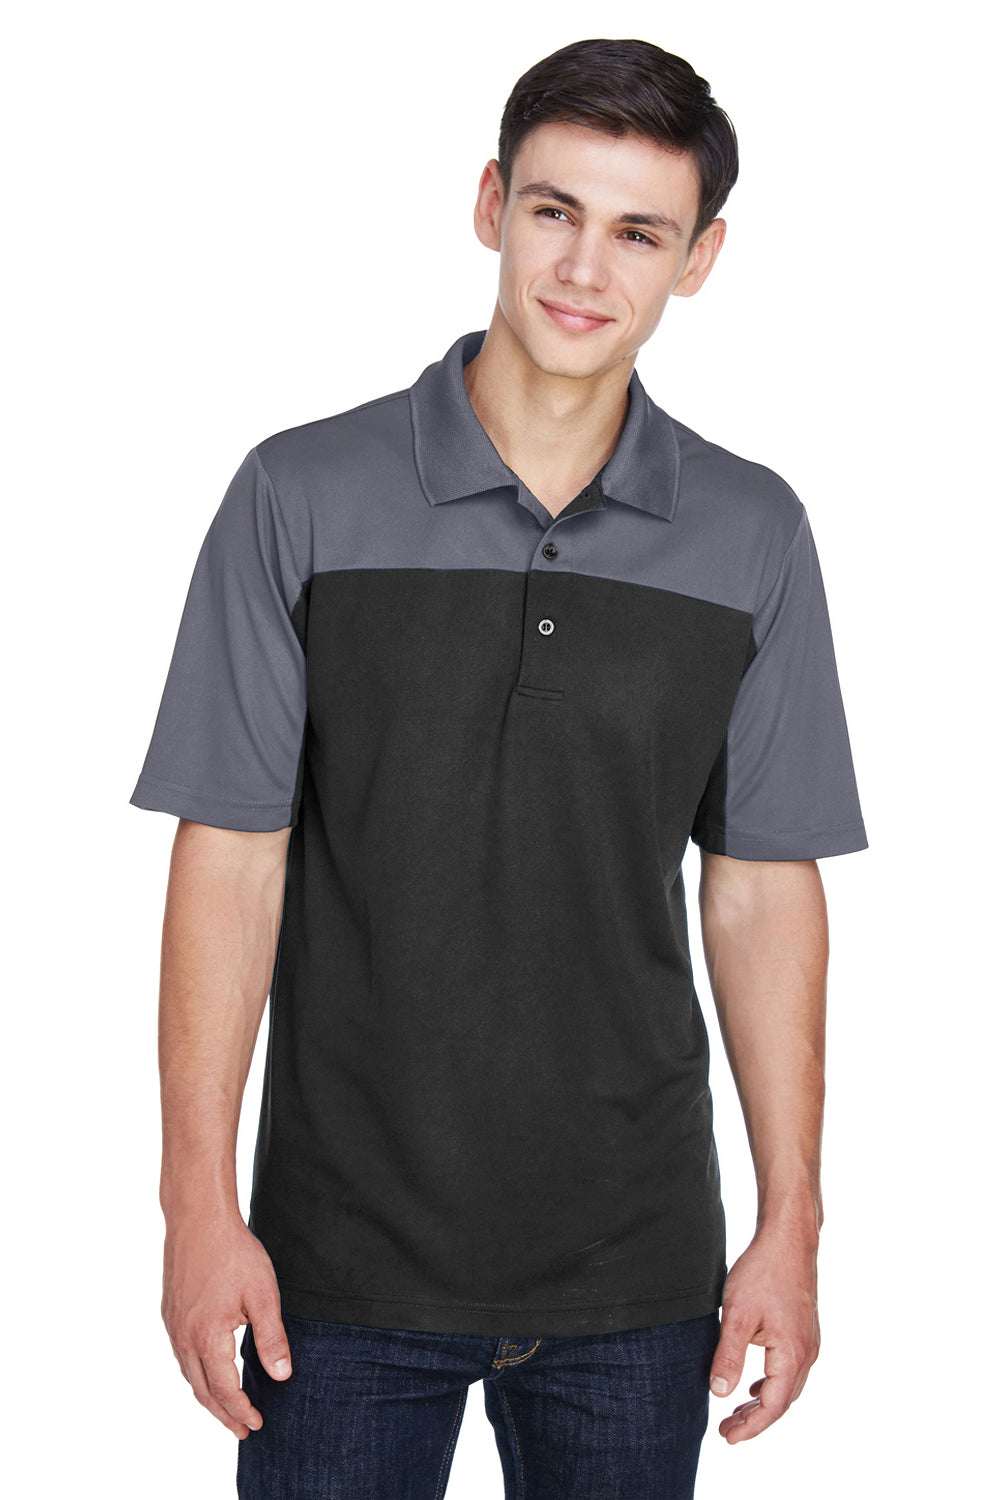 Core 365 CE101 Mens Balance Performance Moisture Wicking Short Sleeve Polo Shirt Black/Grey Front